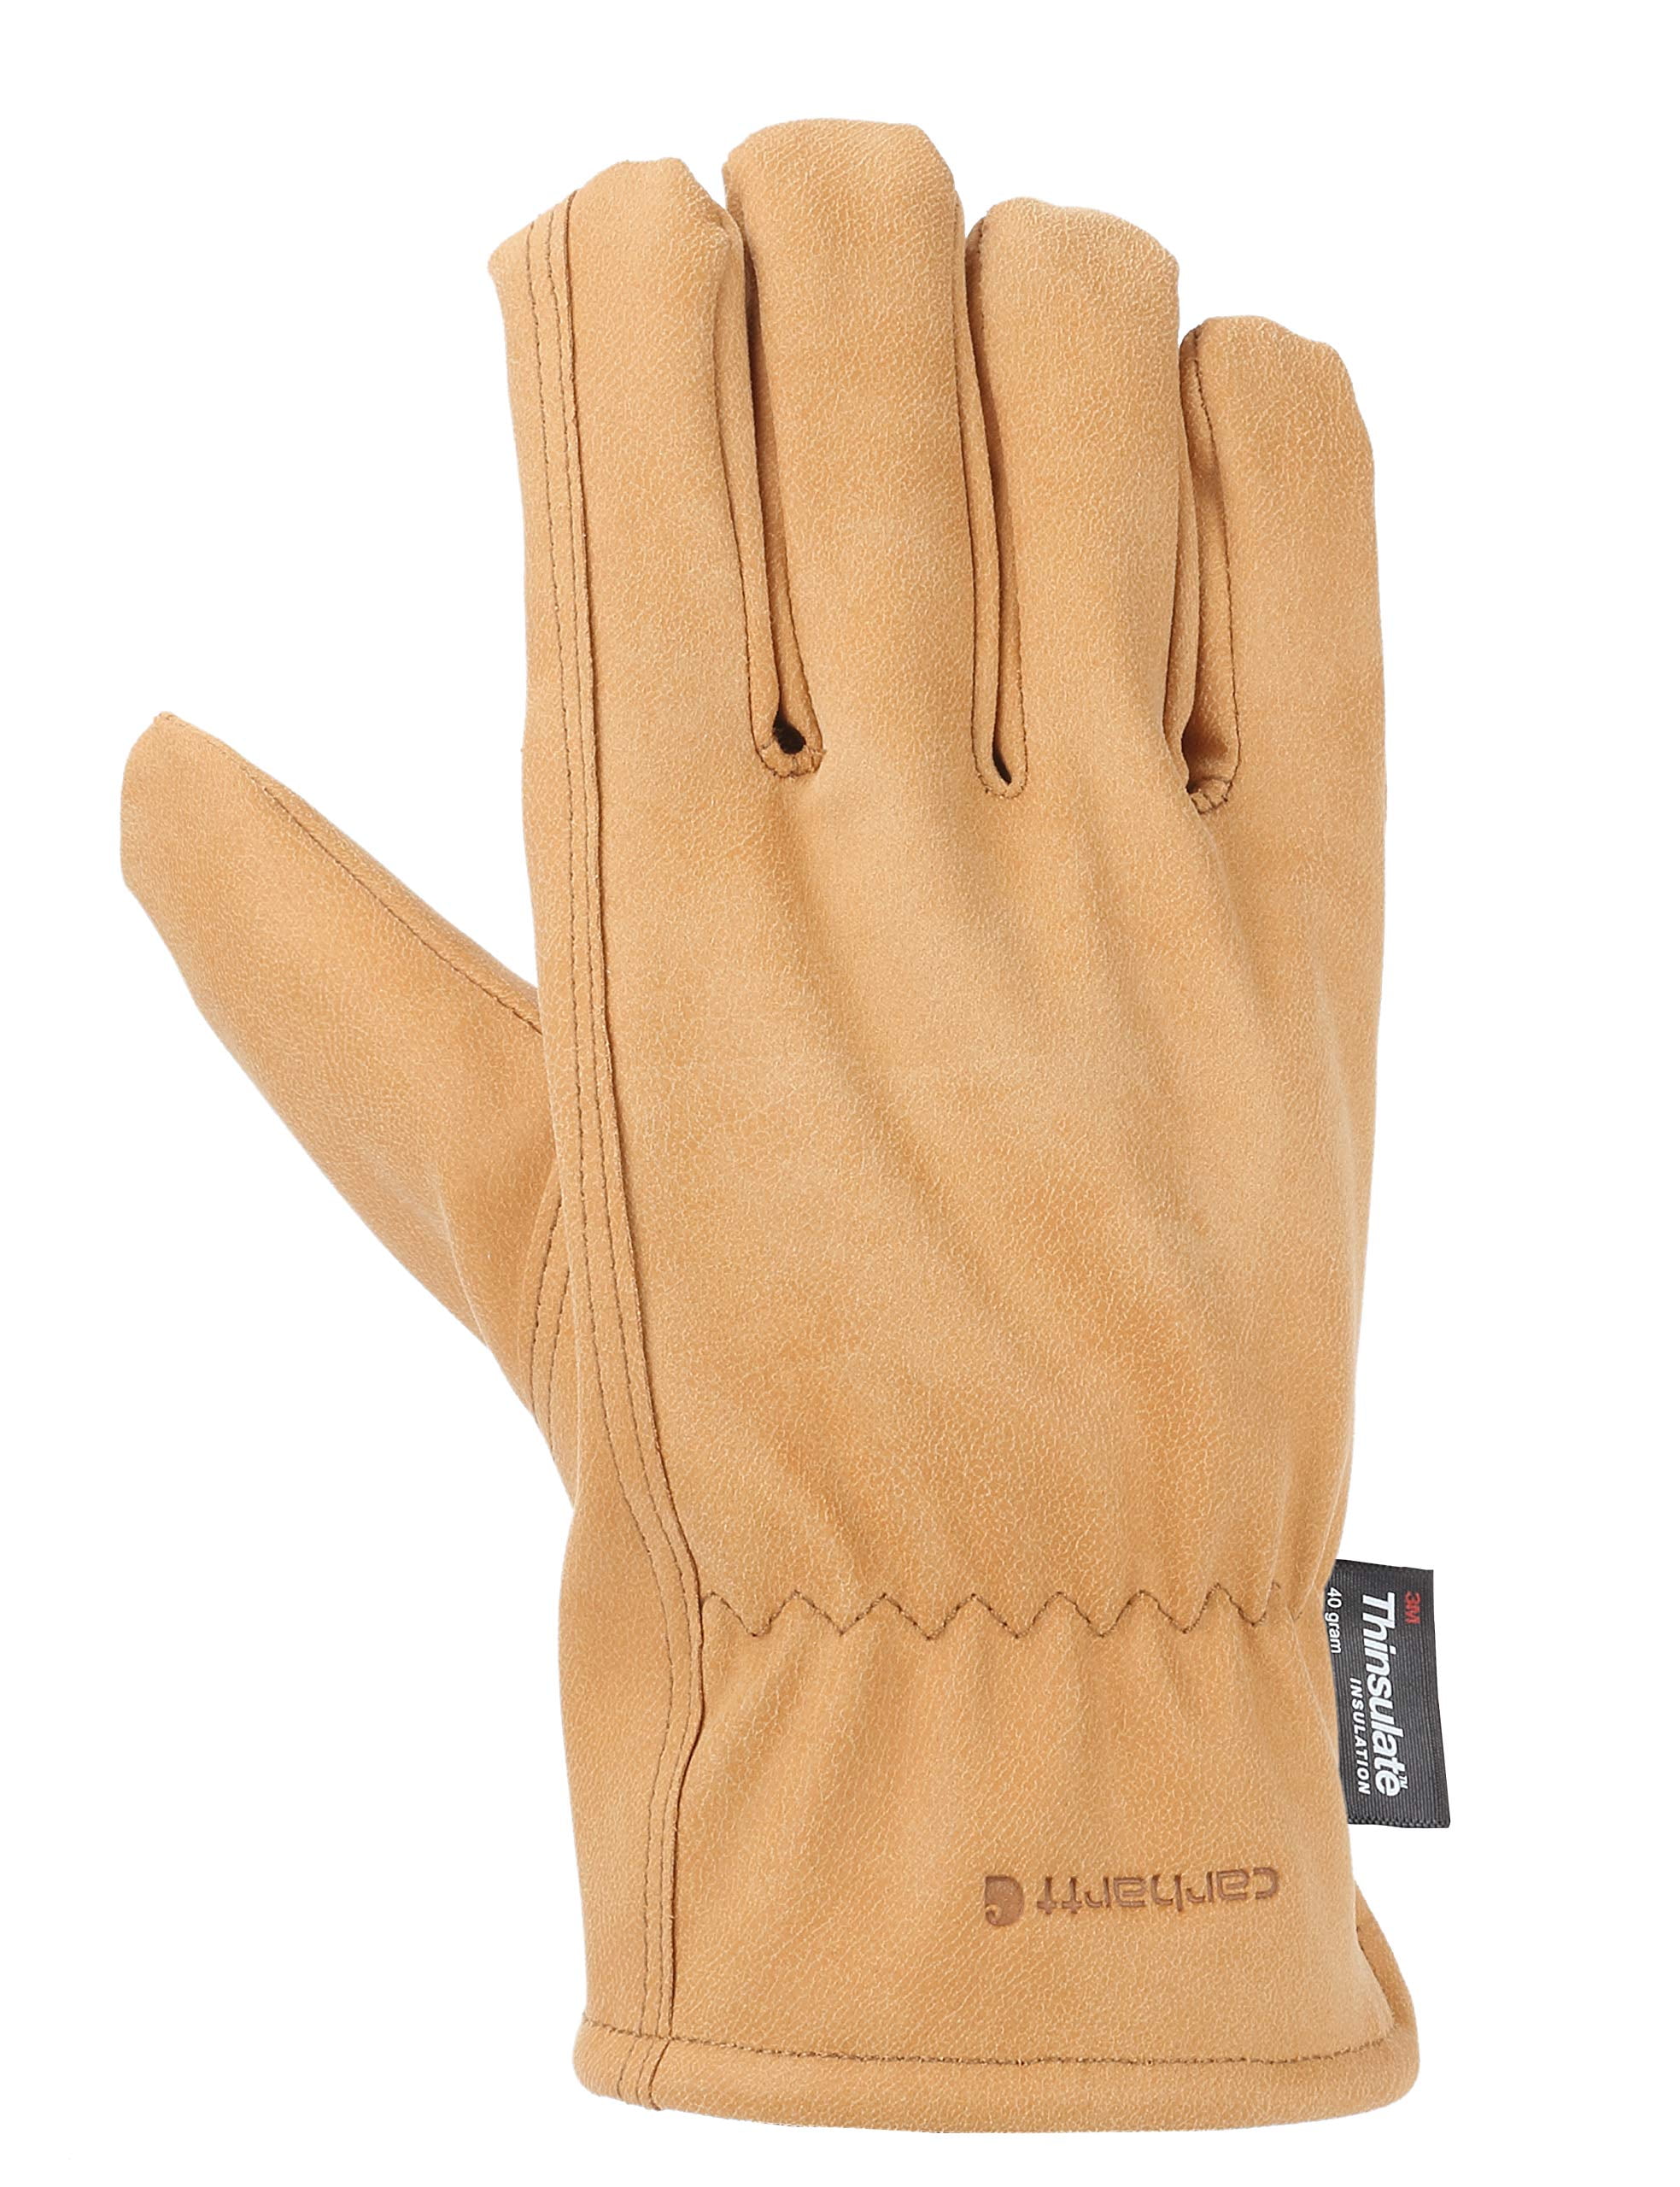 Cahartt XL Gardening Construction Insulated Leather Work Gloves 